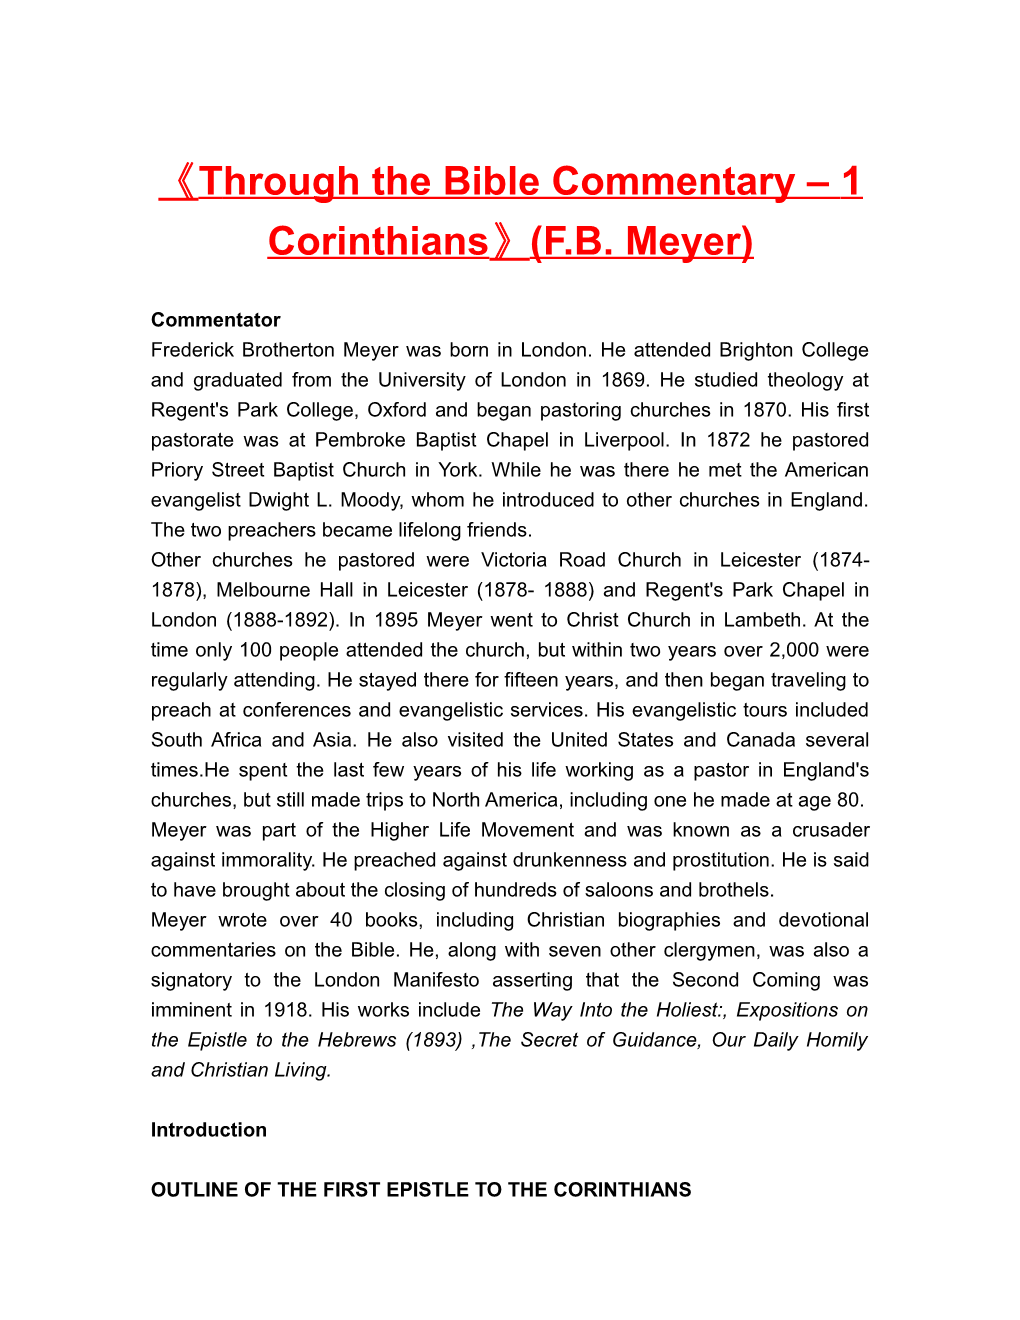 Through the Bible Commentary 1 Corinthians (F.B. Meyer)